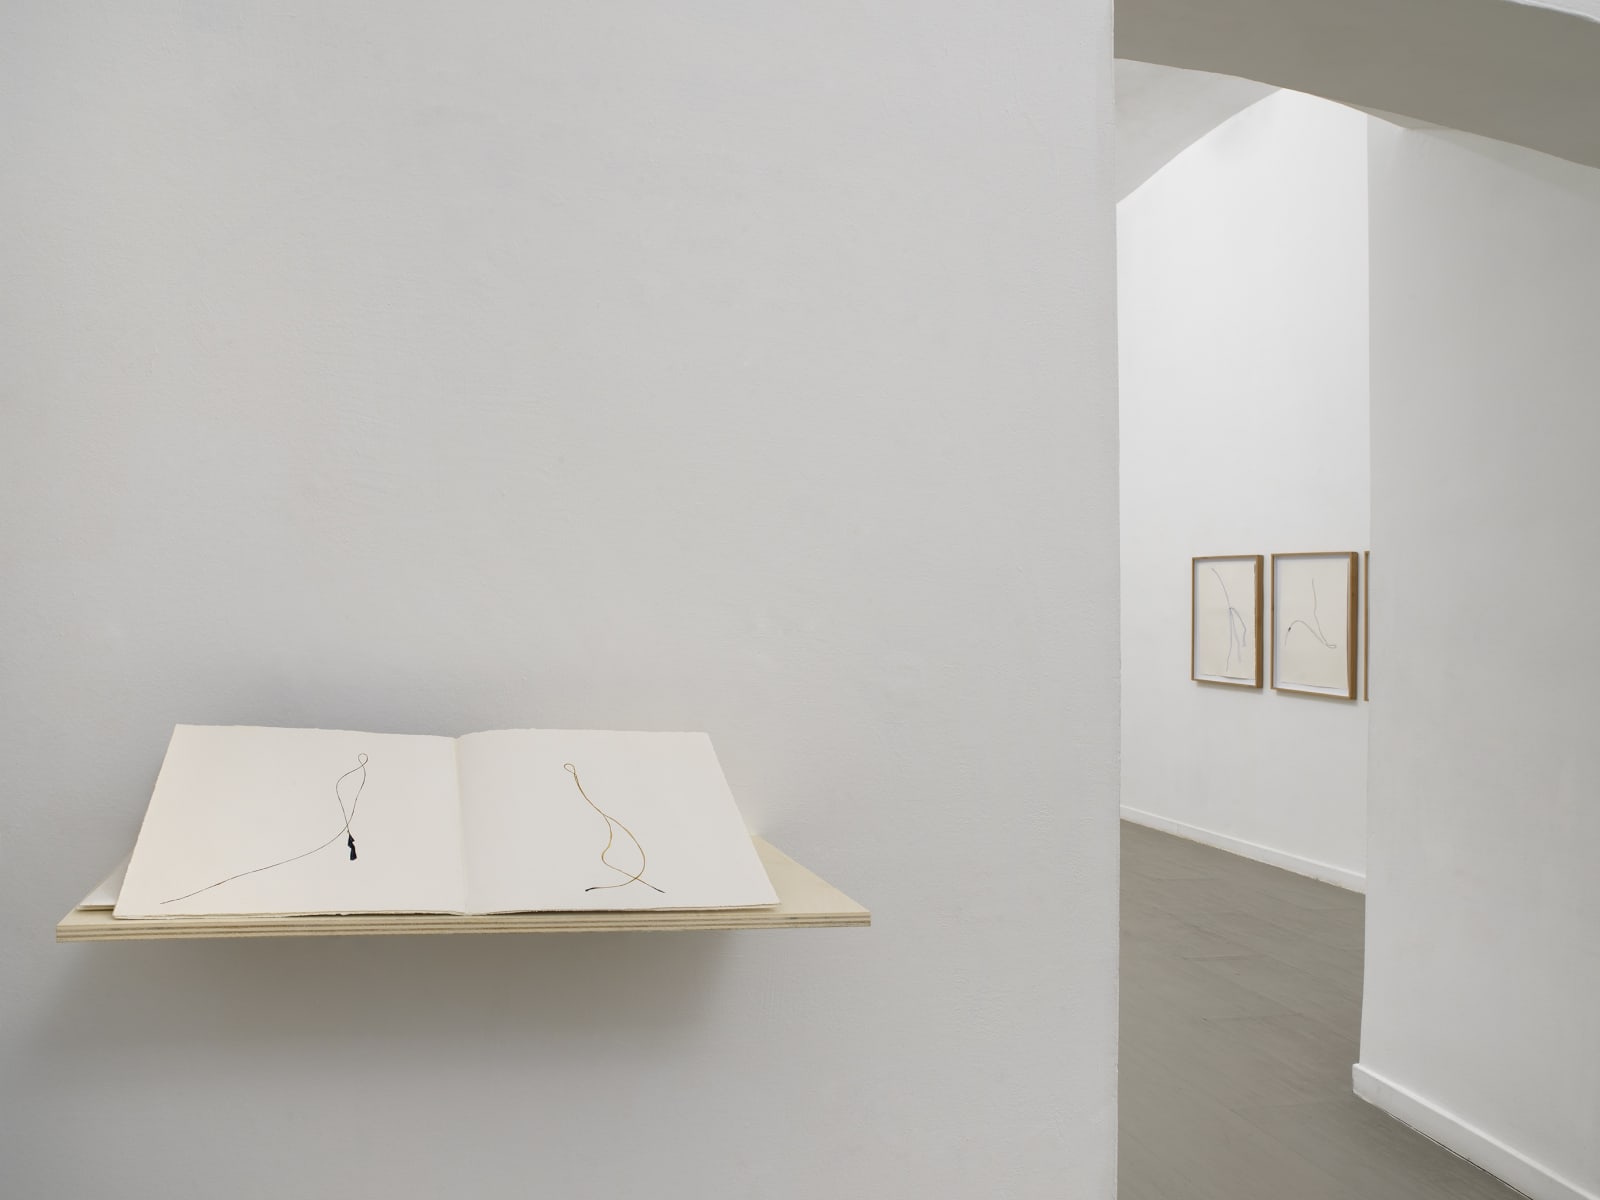 Beatrice Pediconi Nude curated by Cecilia Canziani installation view of the second and third room ph. Dario Lasagni